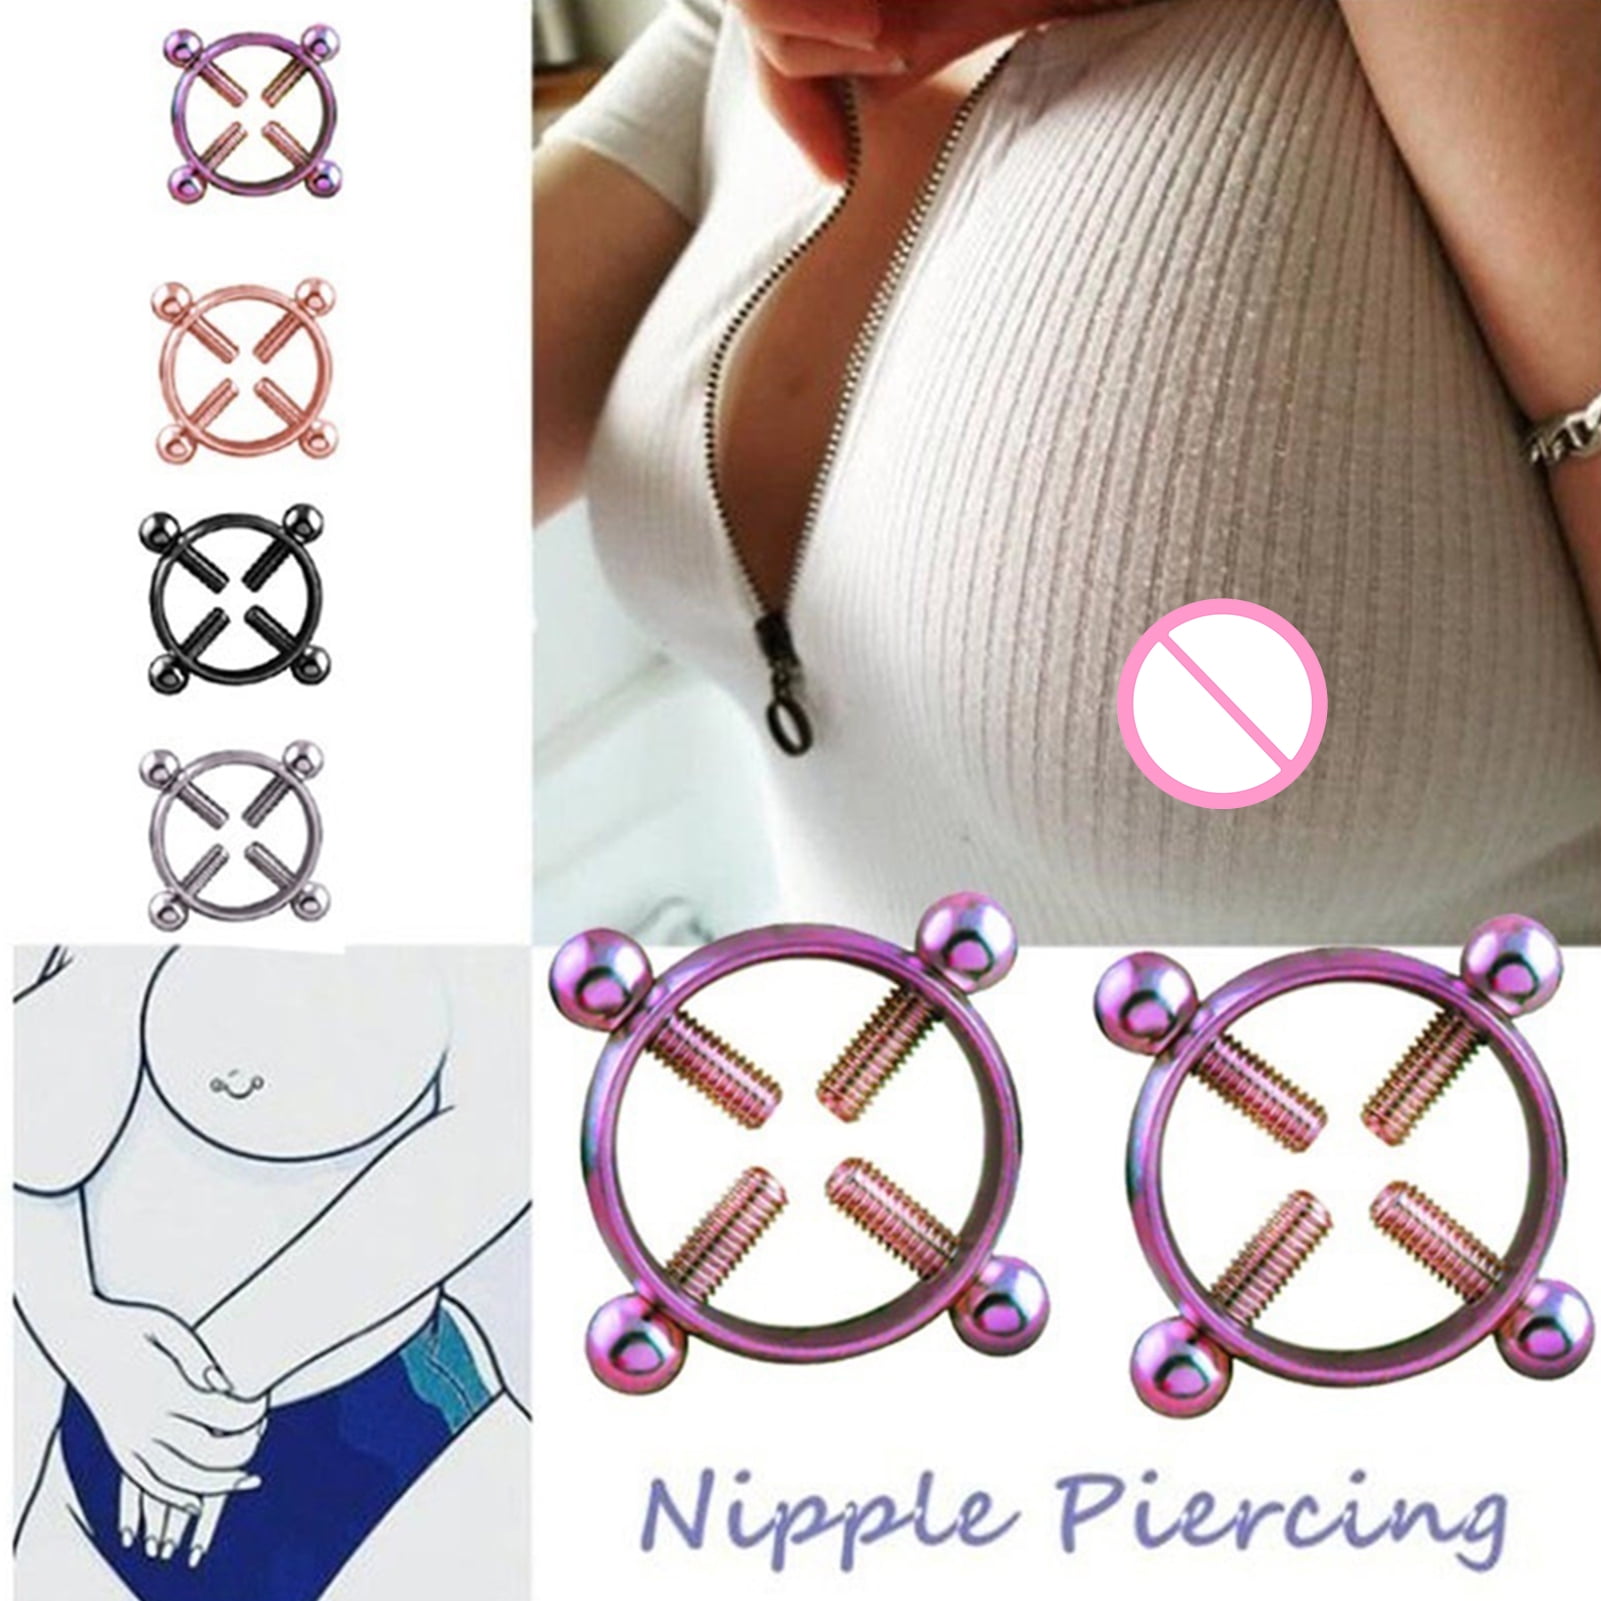 chad lueken recommends Nipple Piercing Sexy